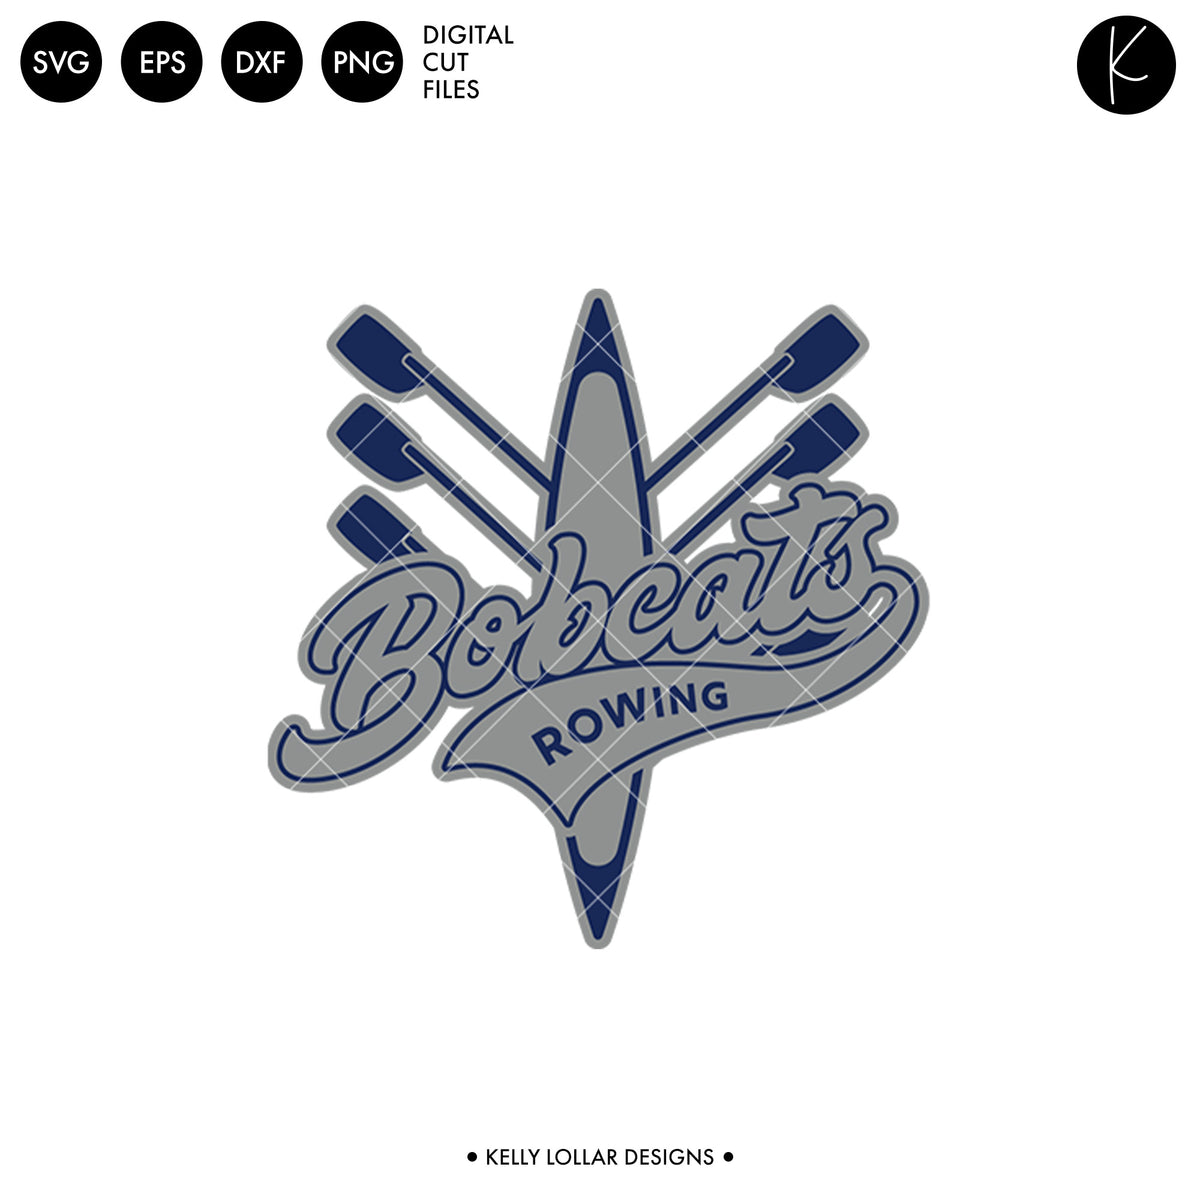 Bobcats Rowing Crew Bundle | SVG DXF EPS PNG Cut Files